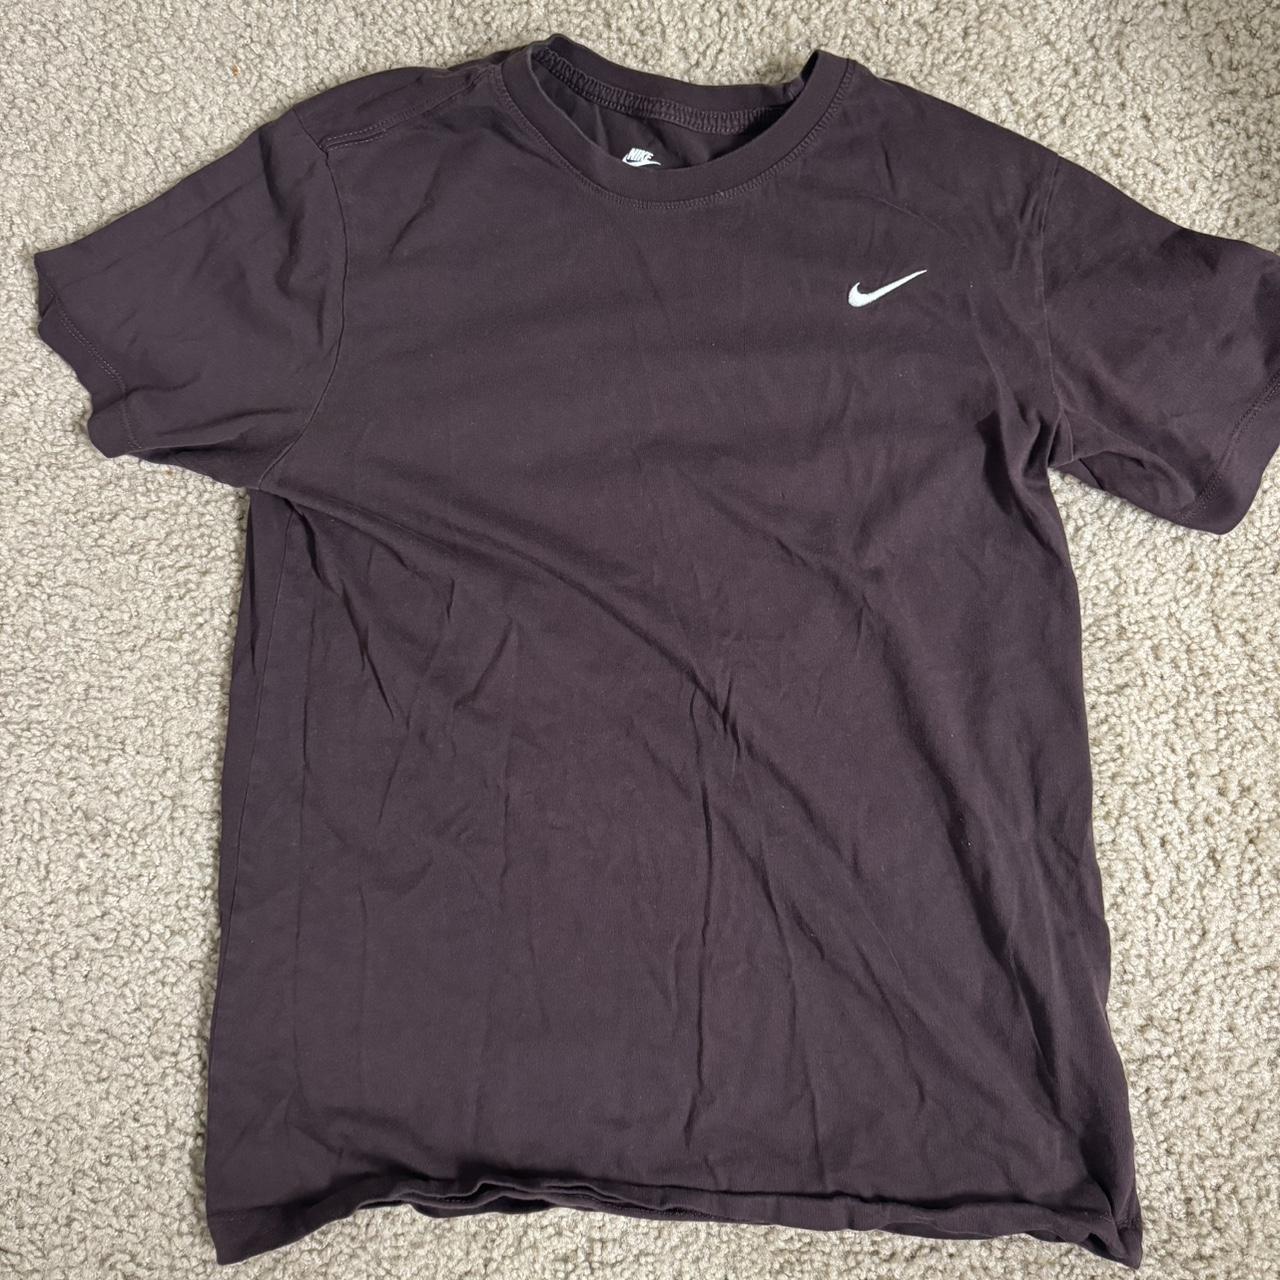 Vintage Nike Tee Shirt Color: Brown Size:... - Depop